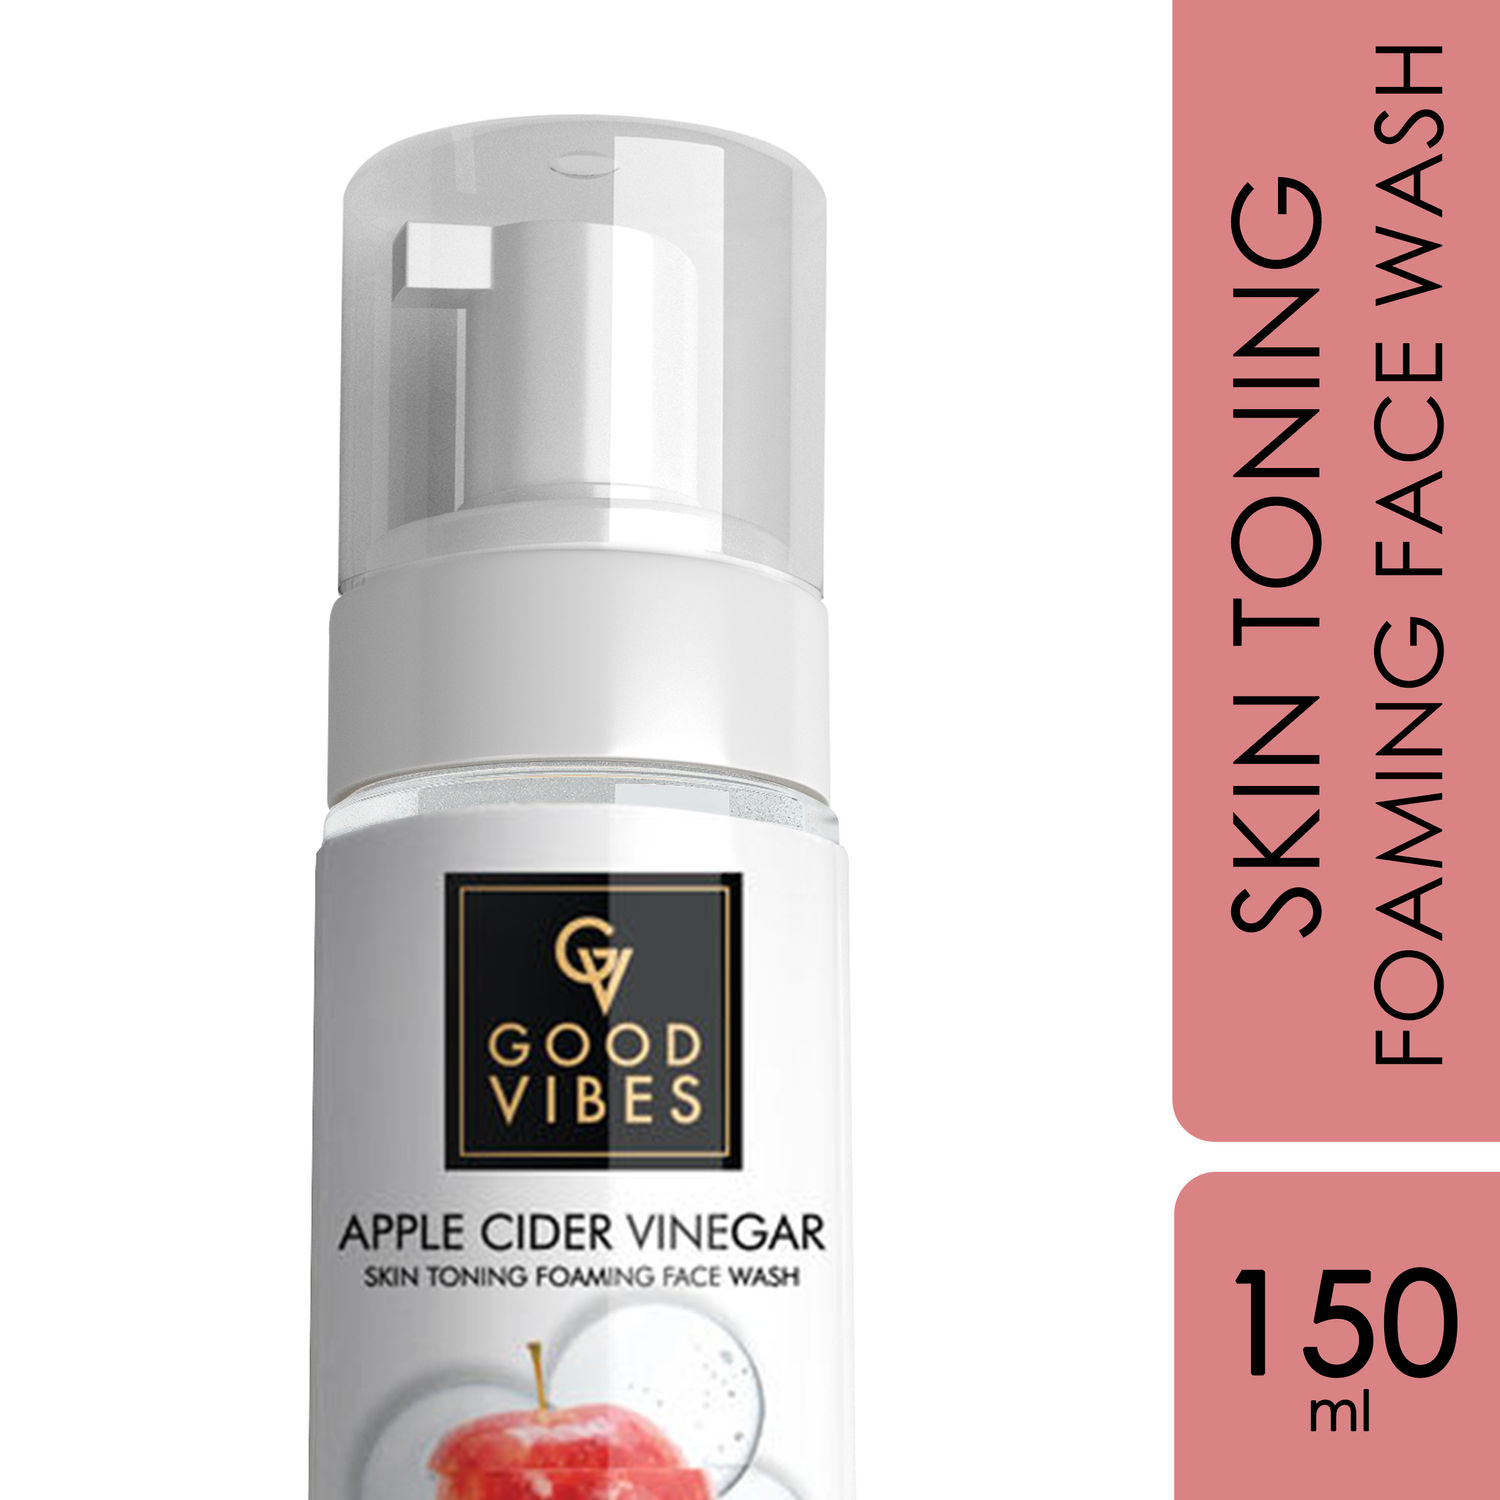 Buy Good Vibes Skin Toning Foaming Face Wash - Apple Cider Vinegar (150ml) - Purplle